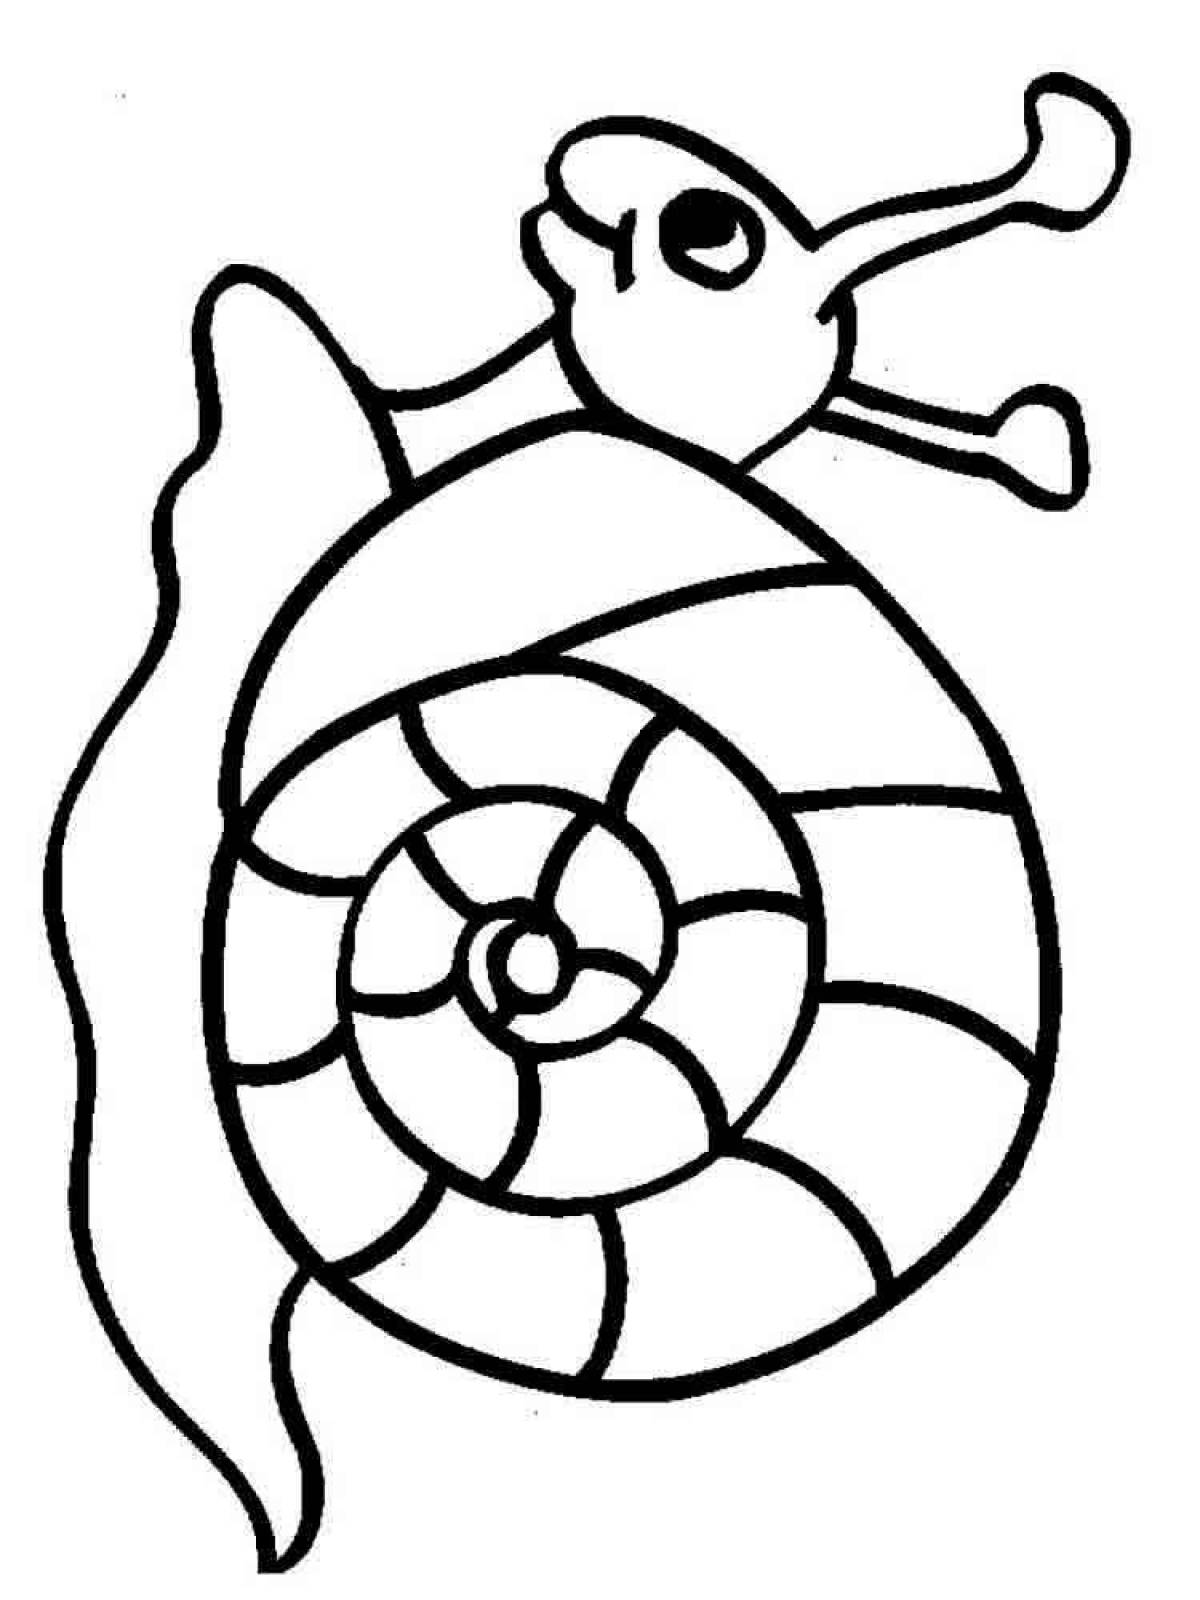 Fancy snail coloring for kids